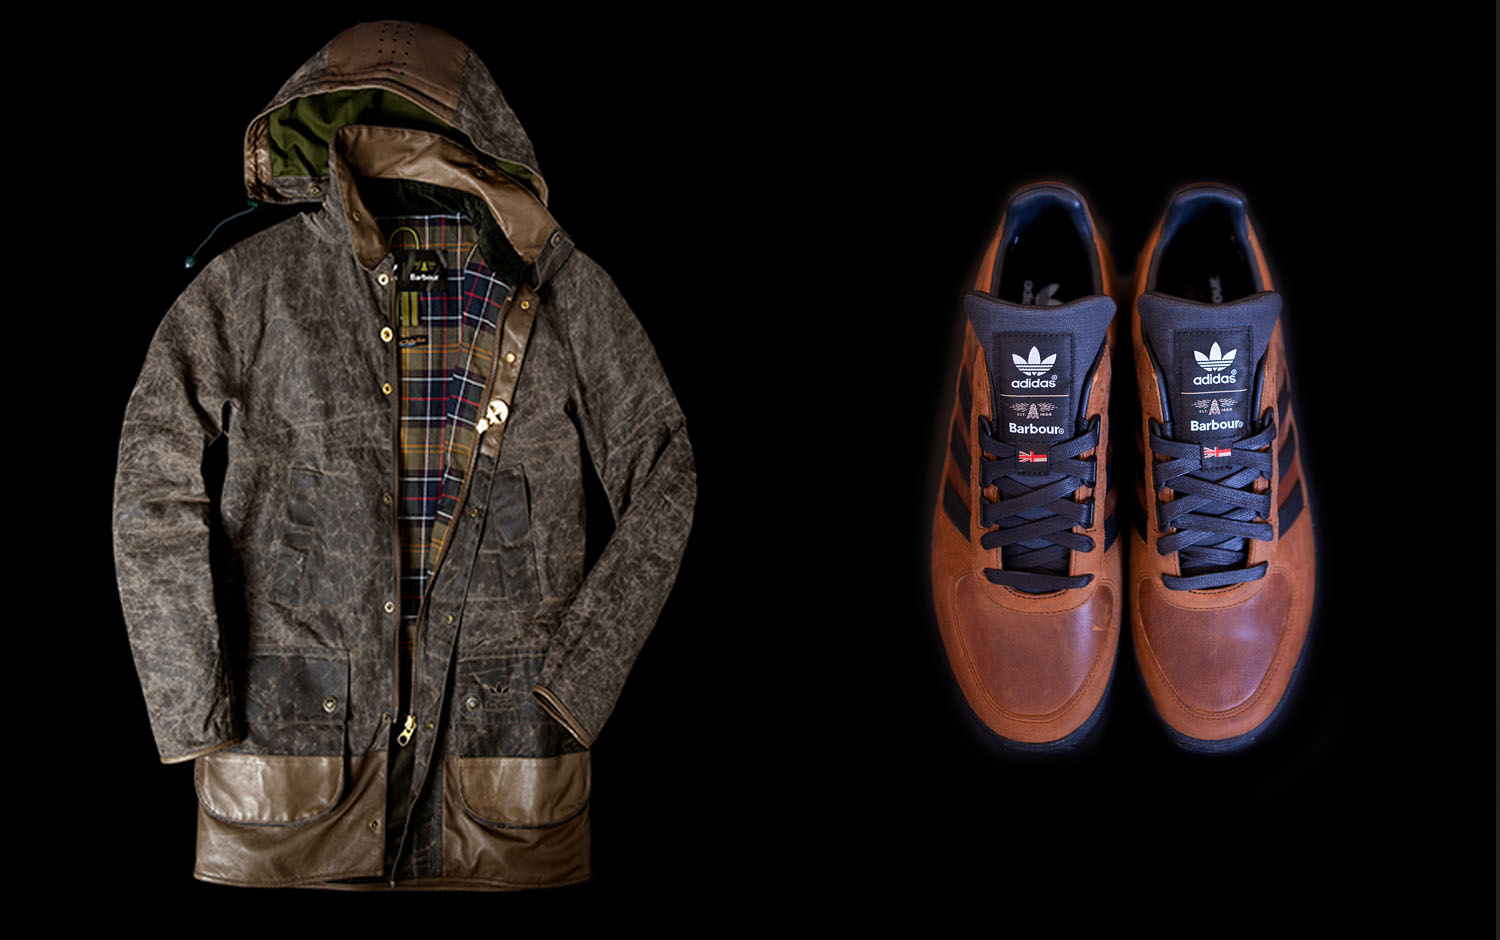 Adidas Originals Hamburg (City Series) – SneakerBlock's Blog